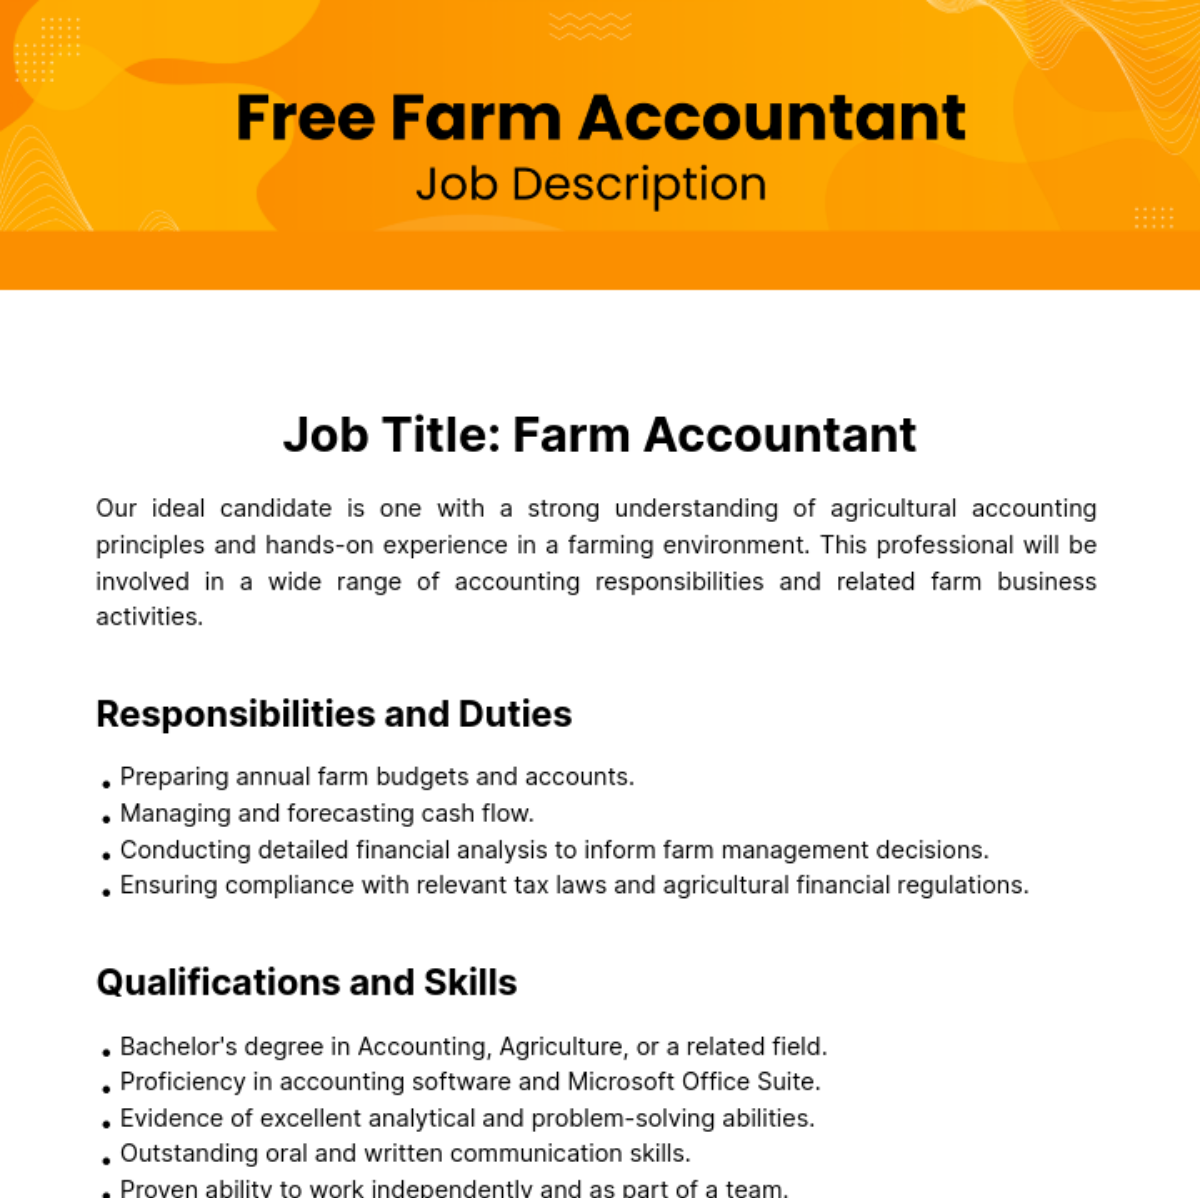 Free Farm Accountant Job Description Template